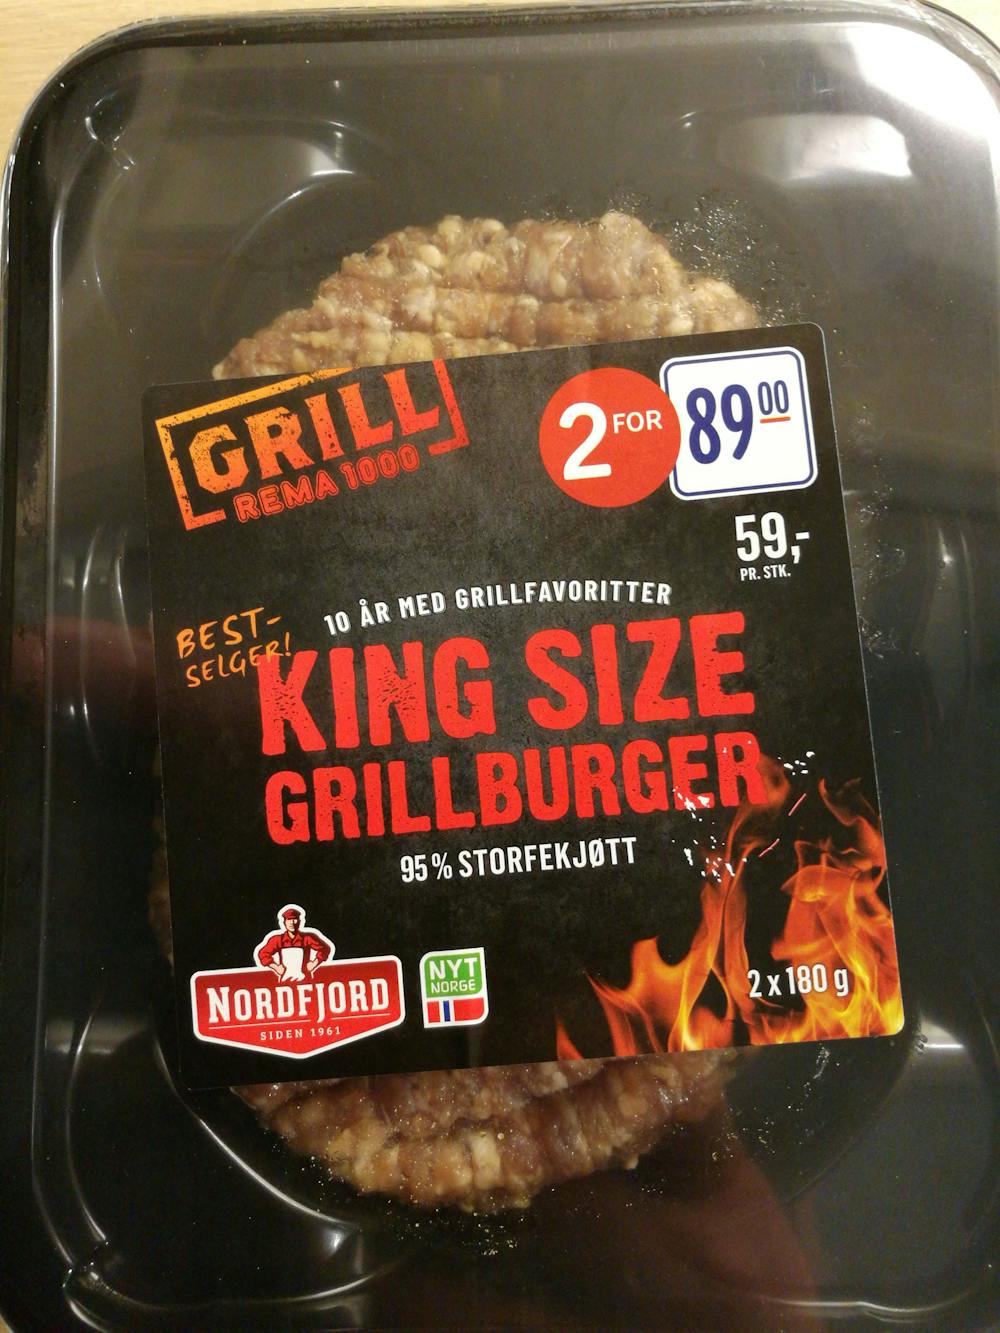 King size grillburger, Nordfjord